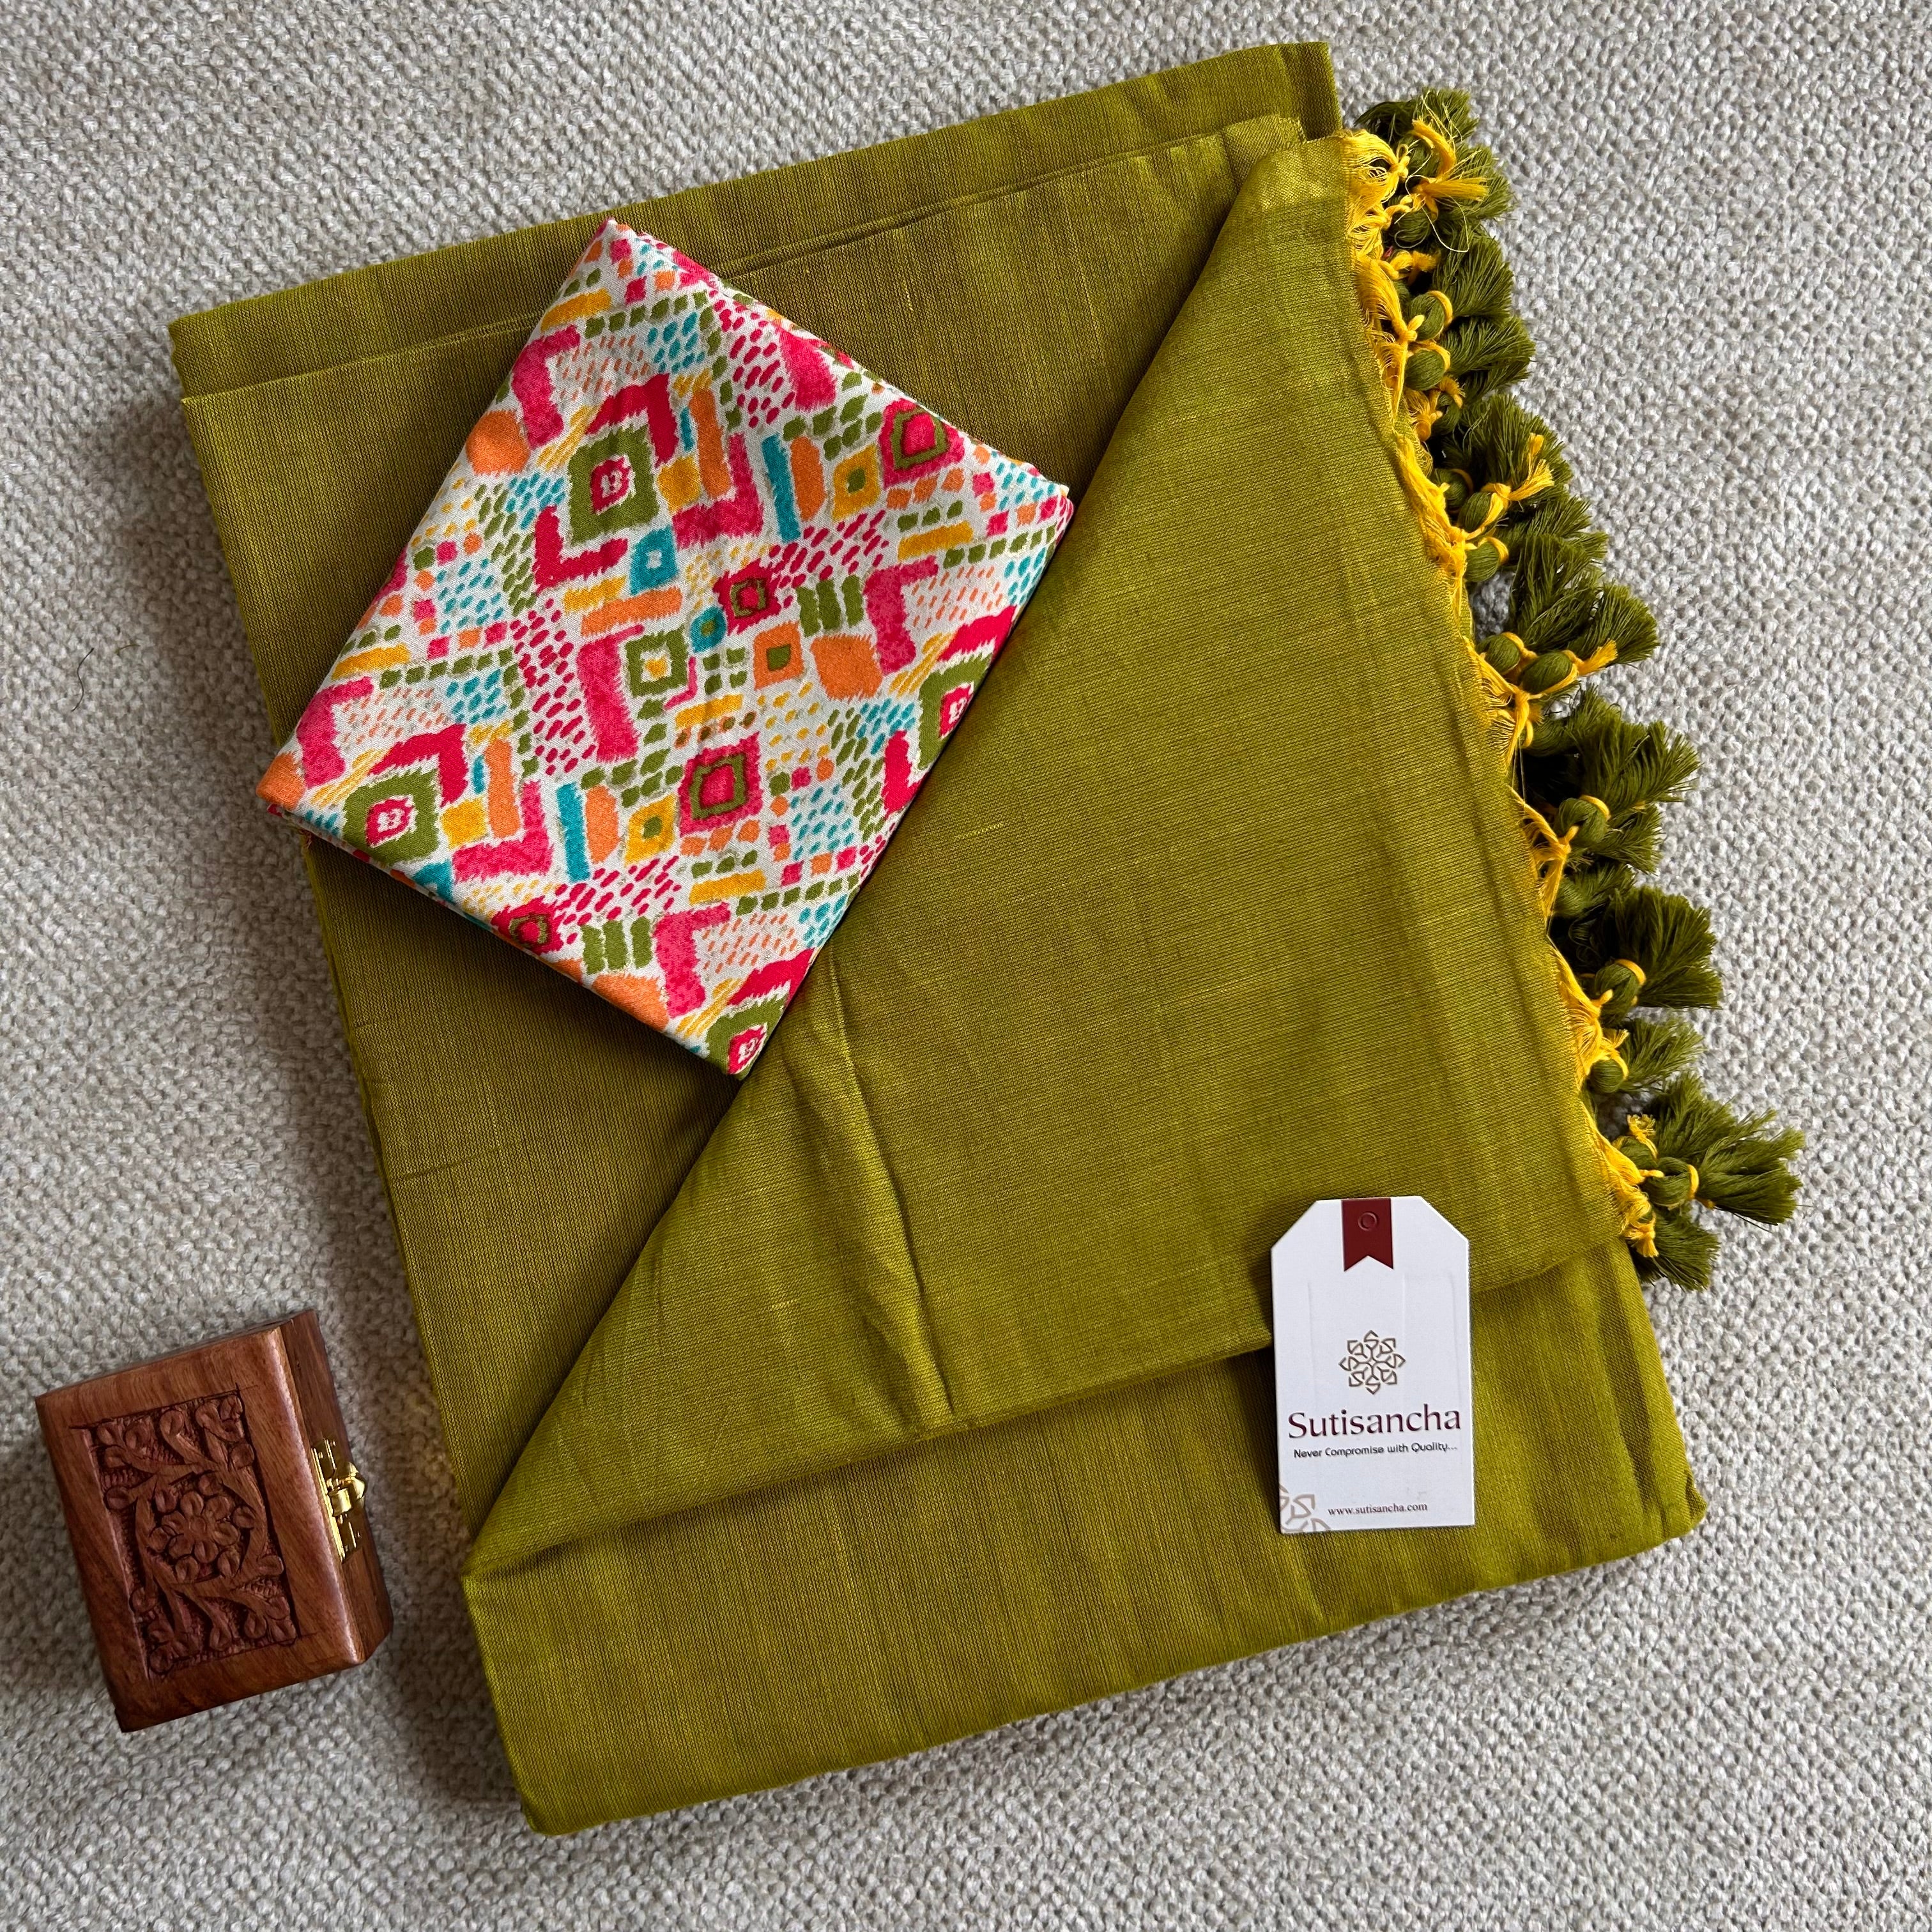 Sutisancha Lime Green Handloom Cotton Saree With Designer Foil Printed Blouse